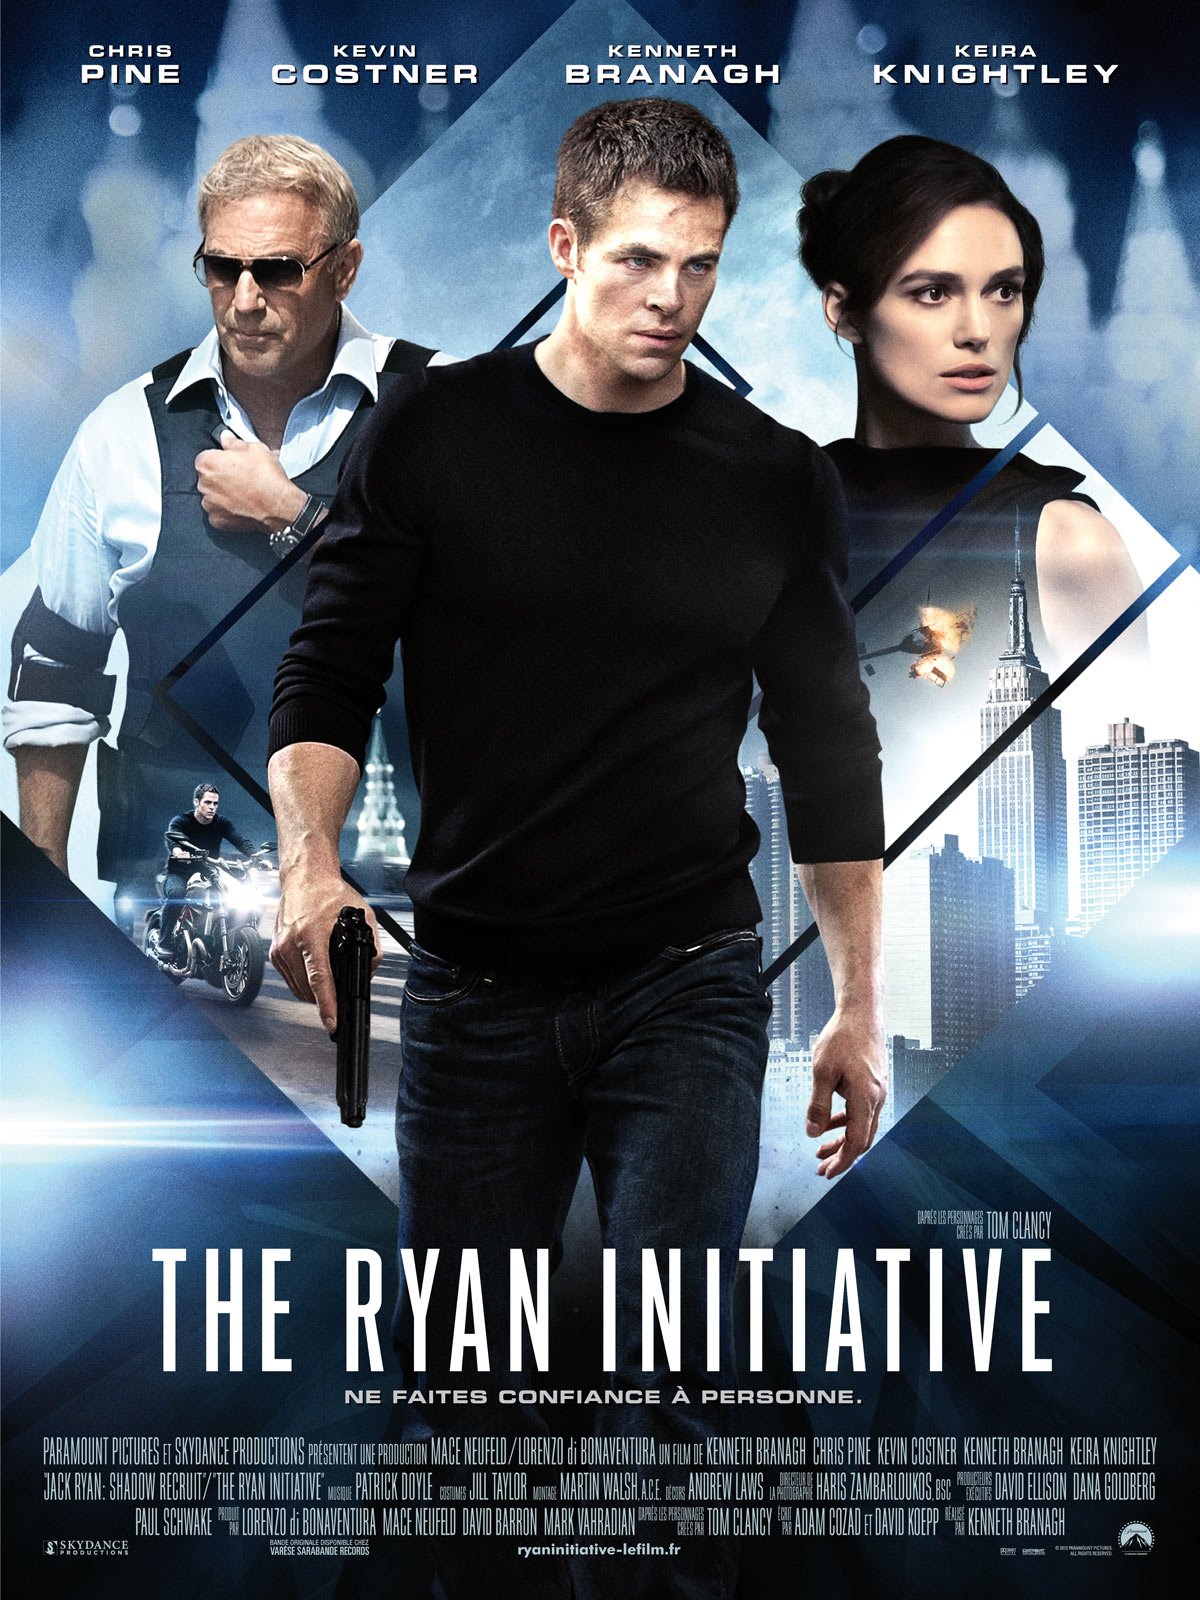 Jack Ryan: Shadow Recruit 4K Blu-ray (The Ryan Initiative 4K) (France)